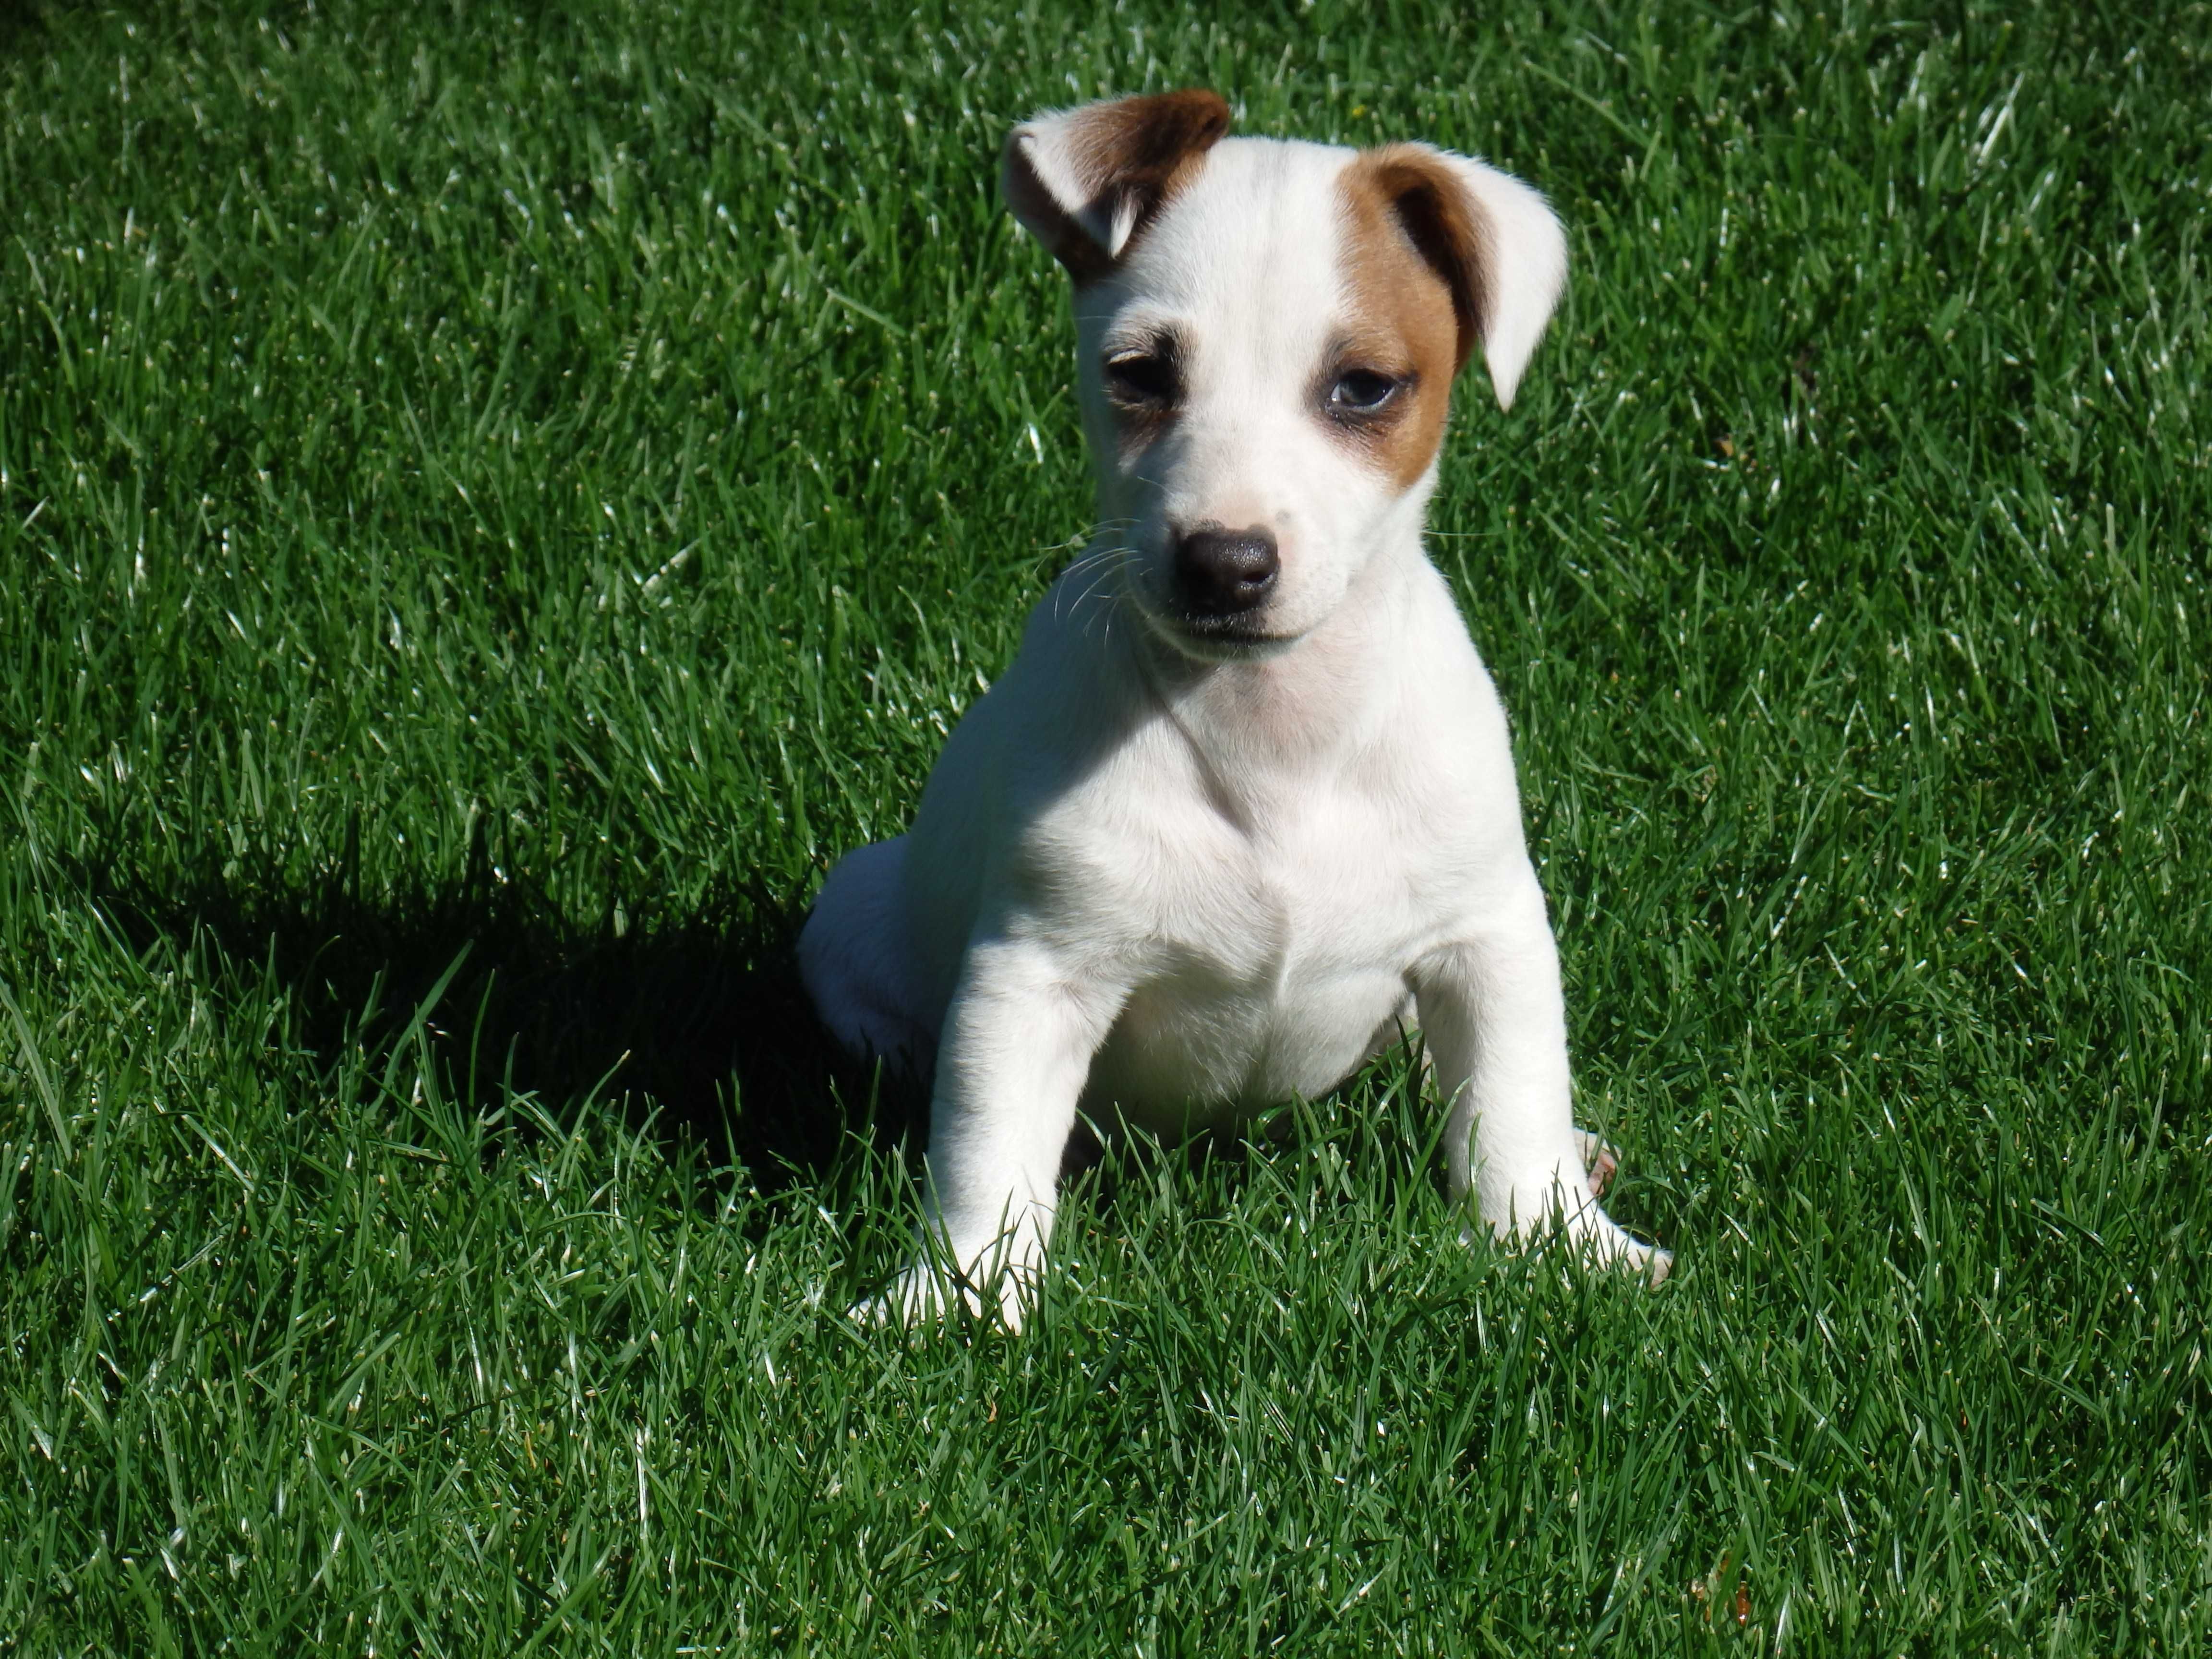 Jack Russell Terrier # BOBER Smartie Jacks # pure breed Jack Russell